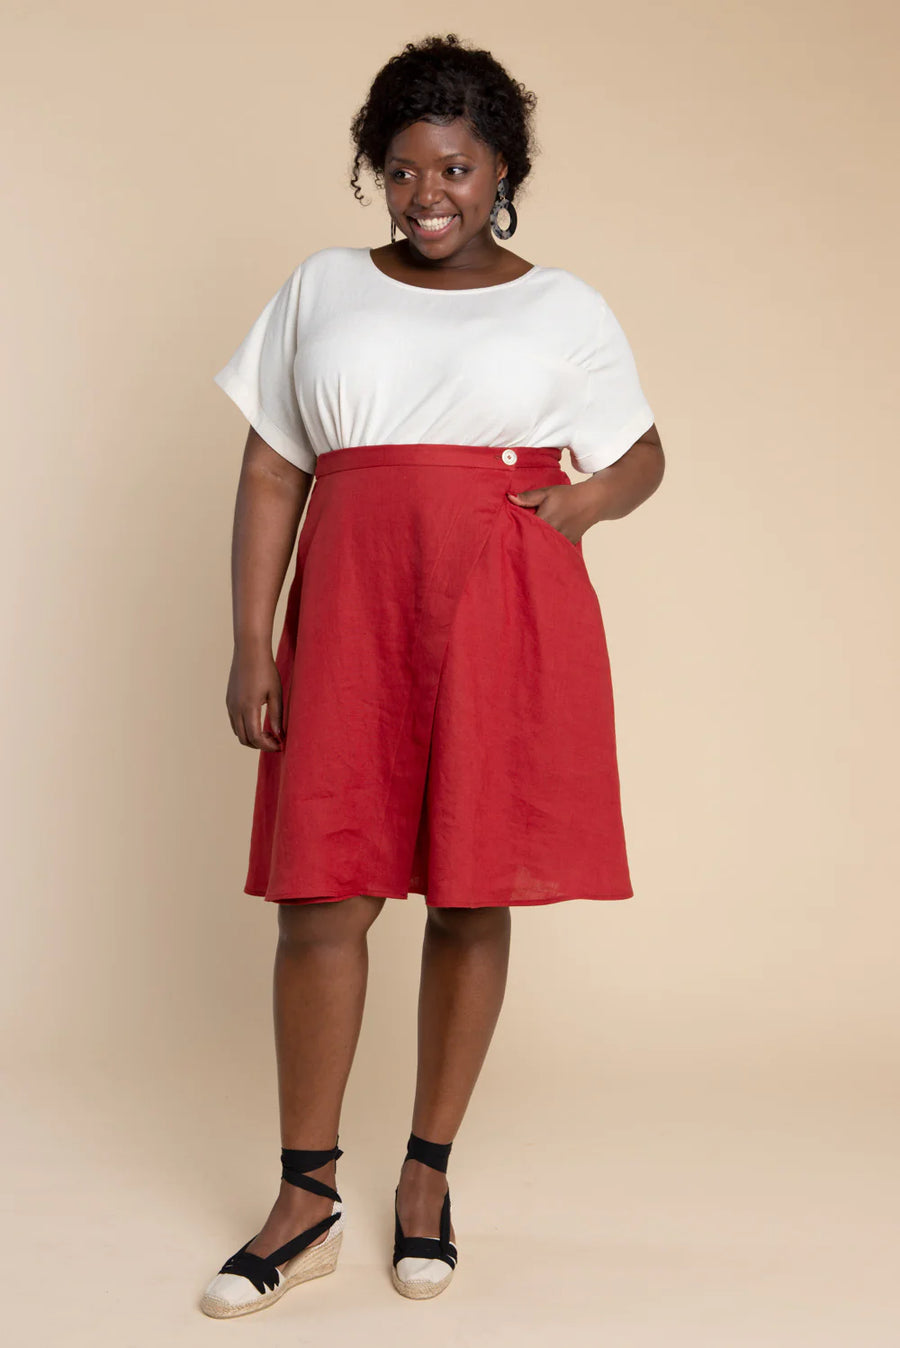 Closet Core - Fiore Skirt